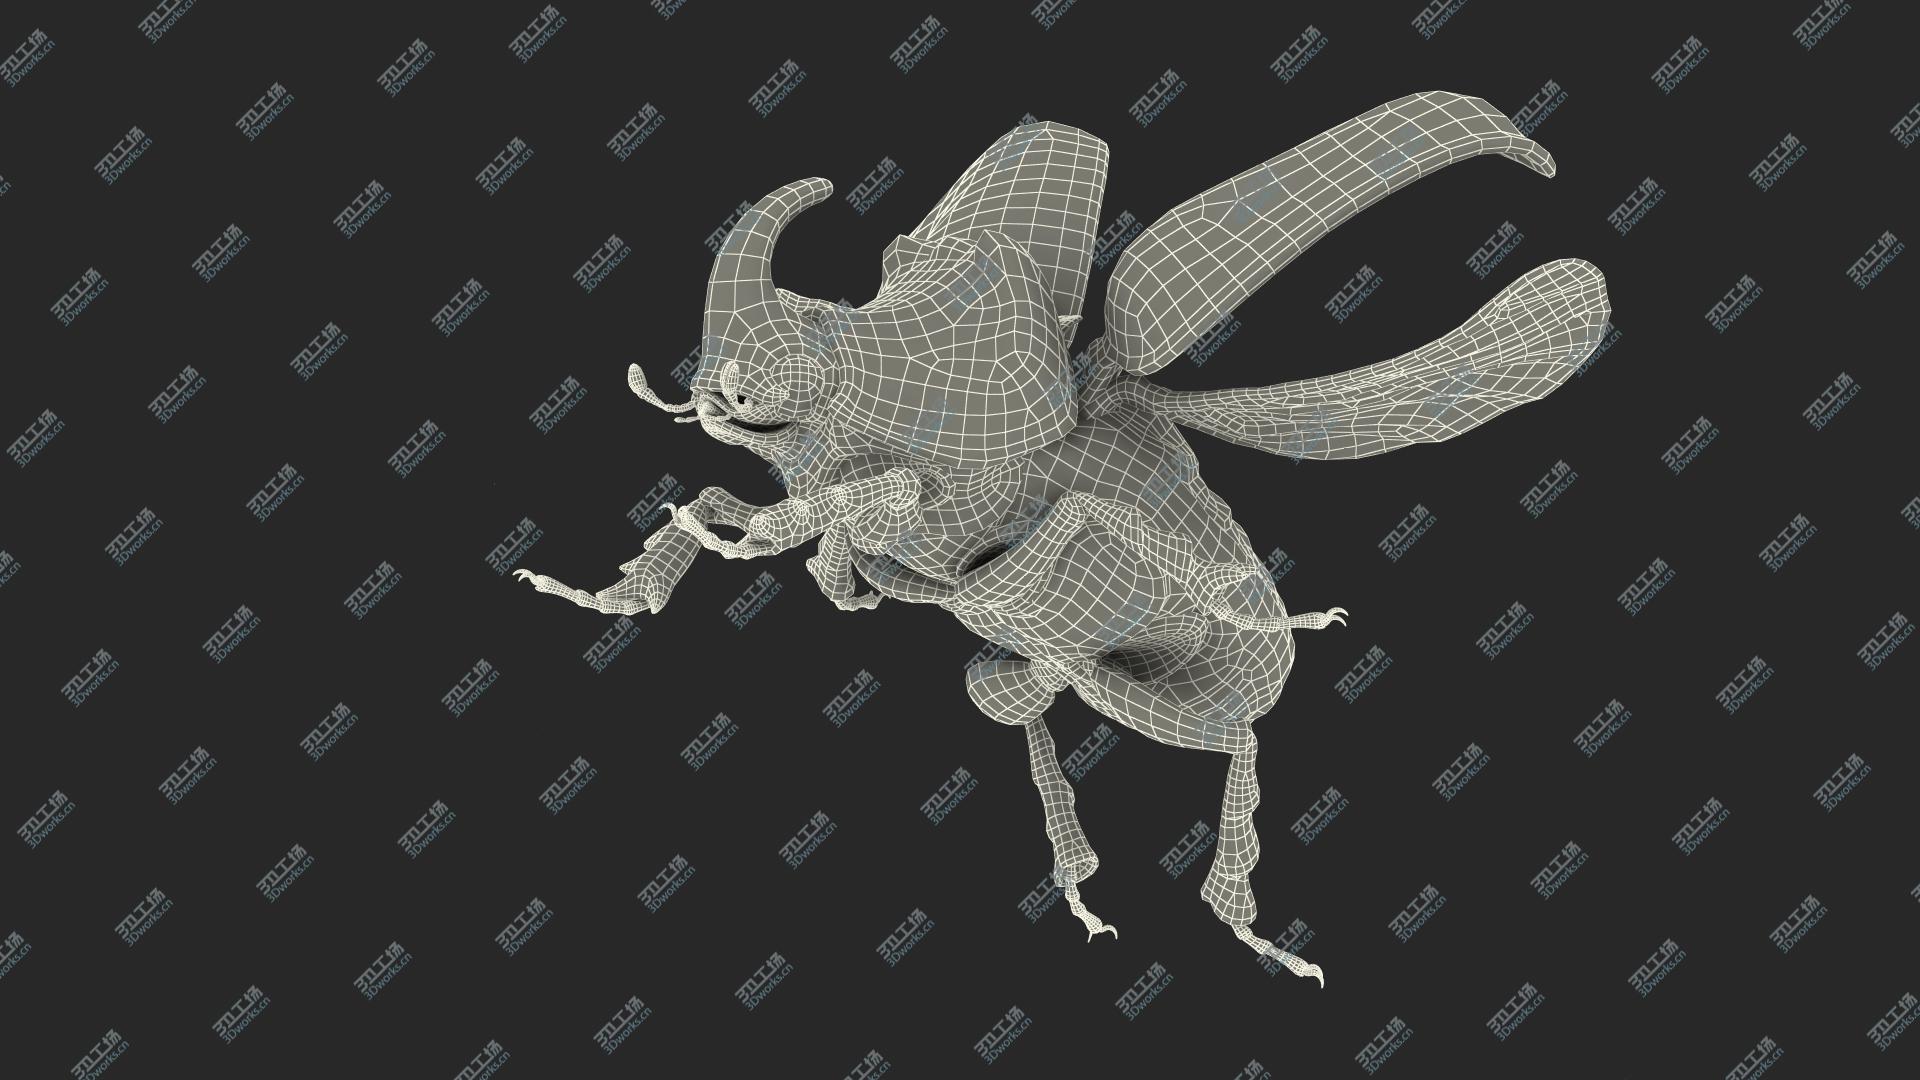 images/goods_img/202104093/Rhinoceros Beetle Oryctes Nasicornis Flying 3D model/3.jpg